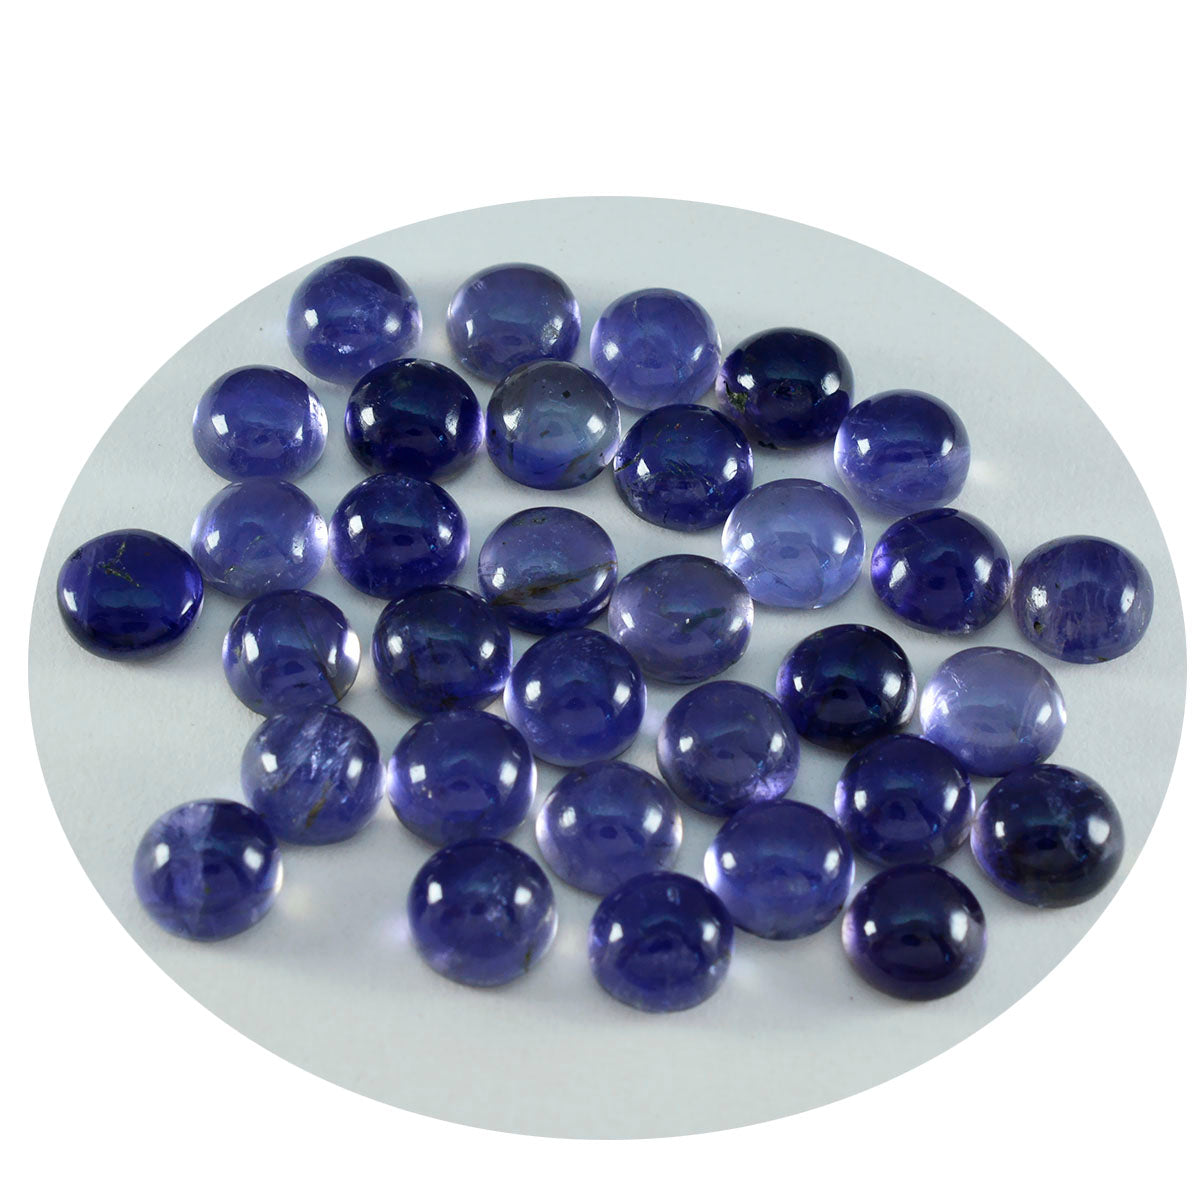 Riyogems 1PC blauwe ioliet cabochon 7x7 mm ronde vorm A+ kwaliteit losse edelsteen